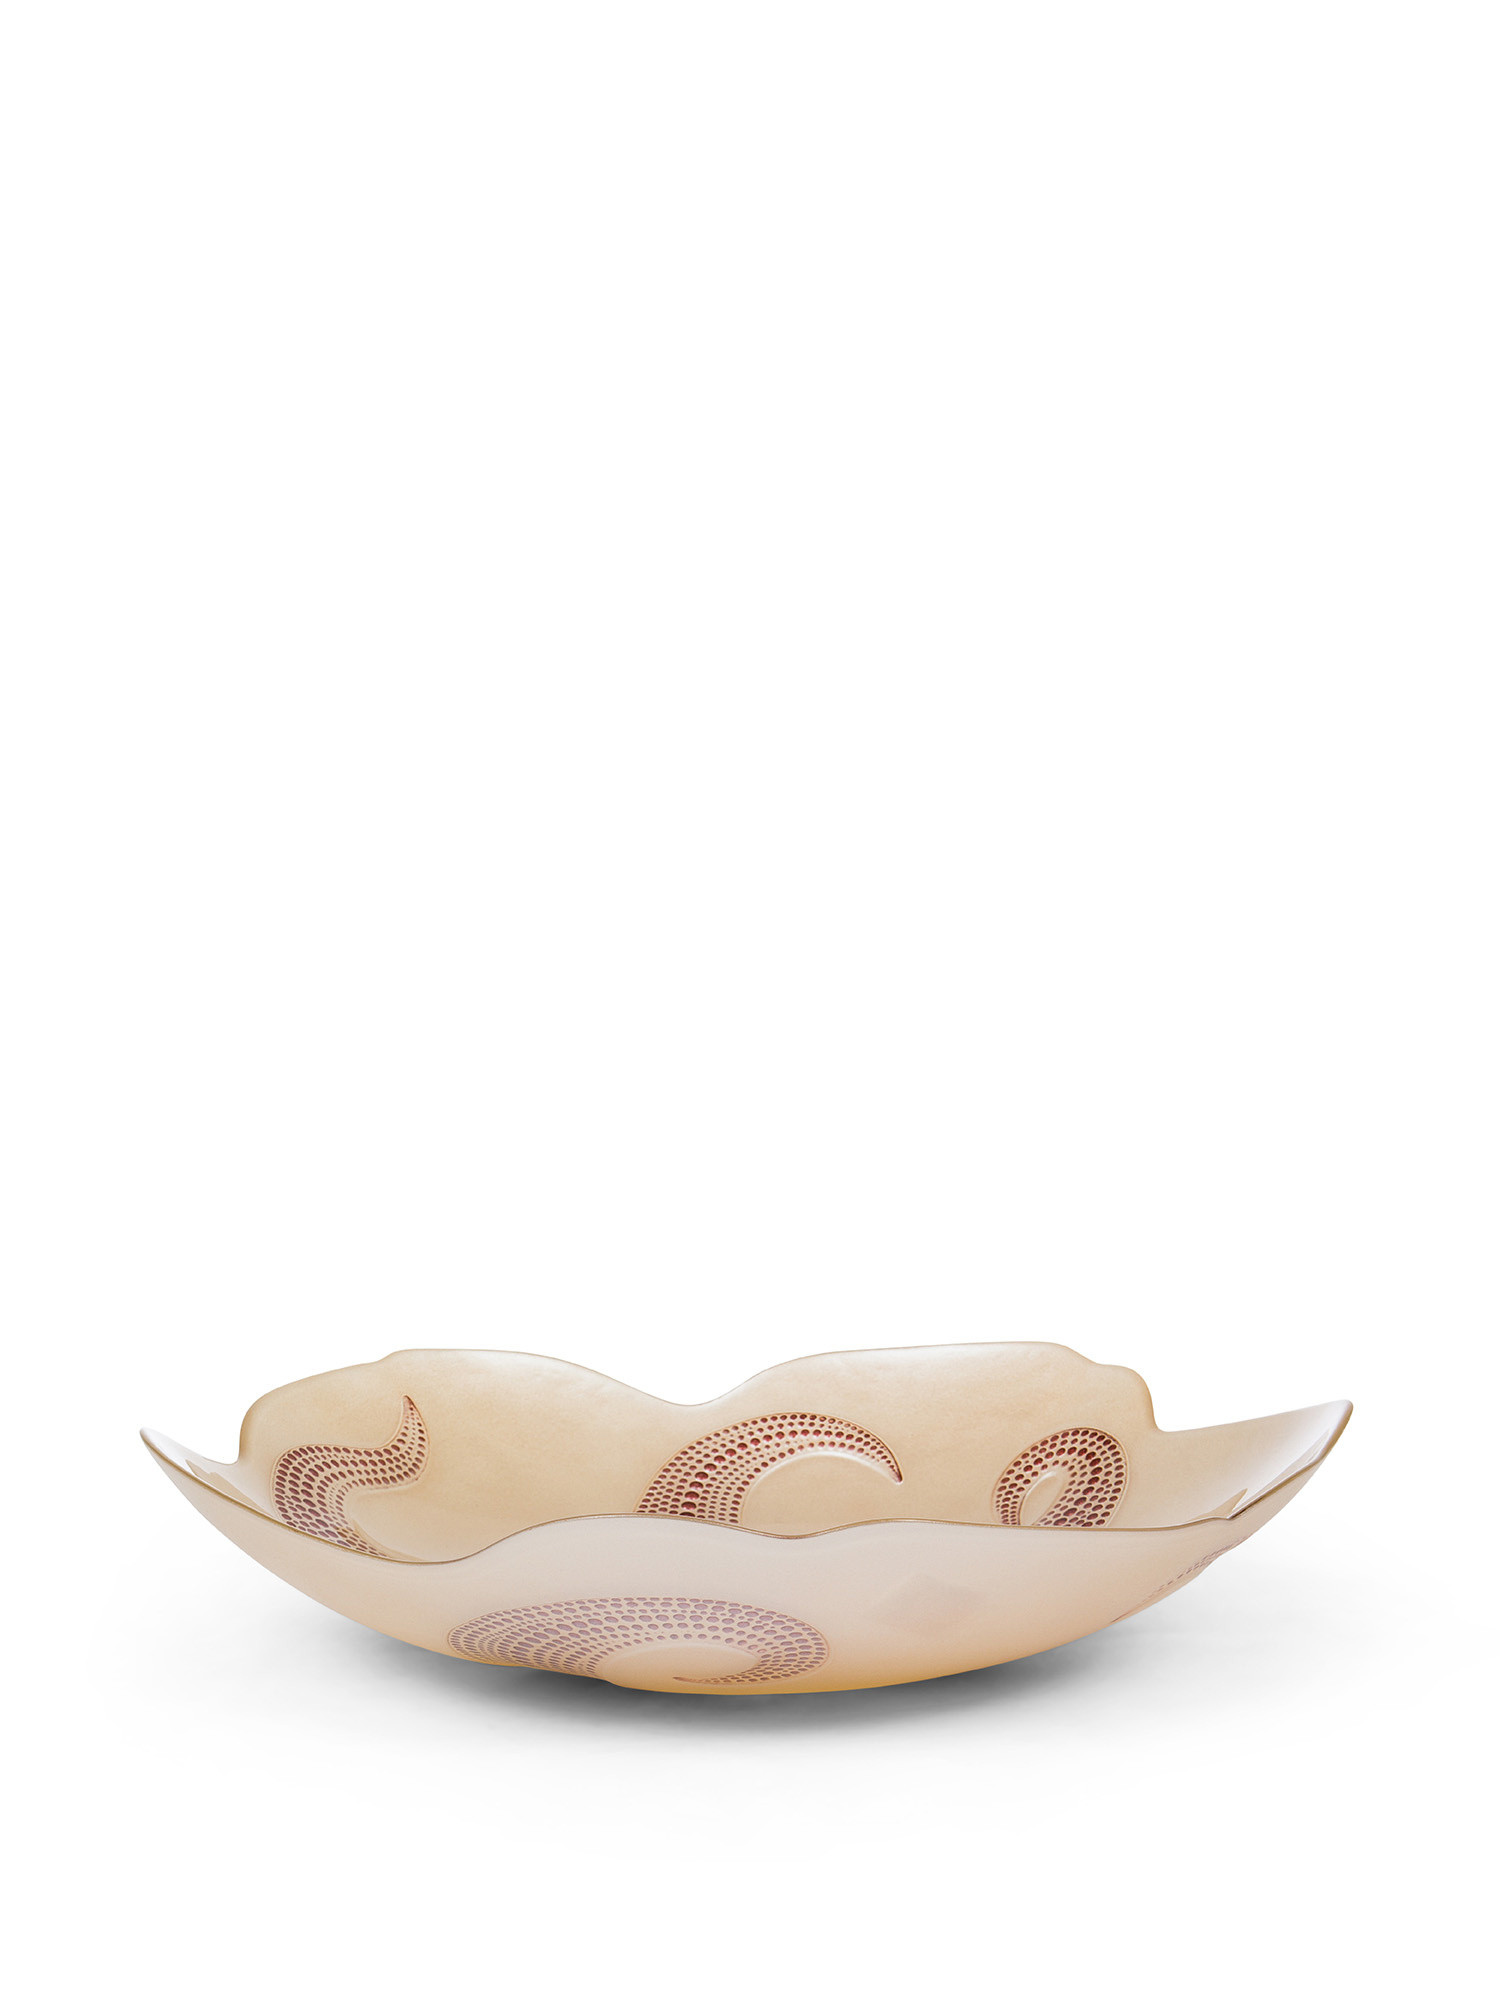 Octopus motif glass centrepiece, Sand, large image number 0